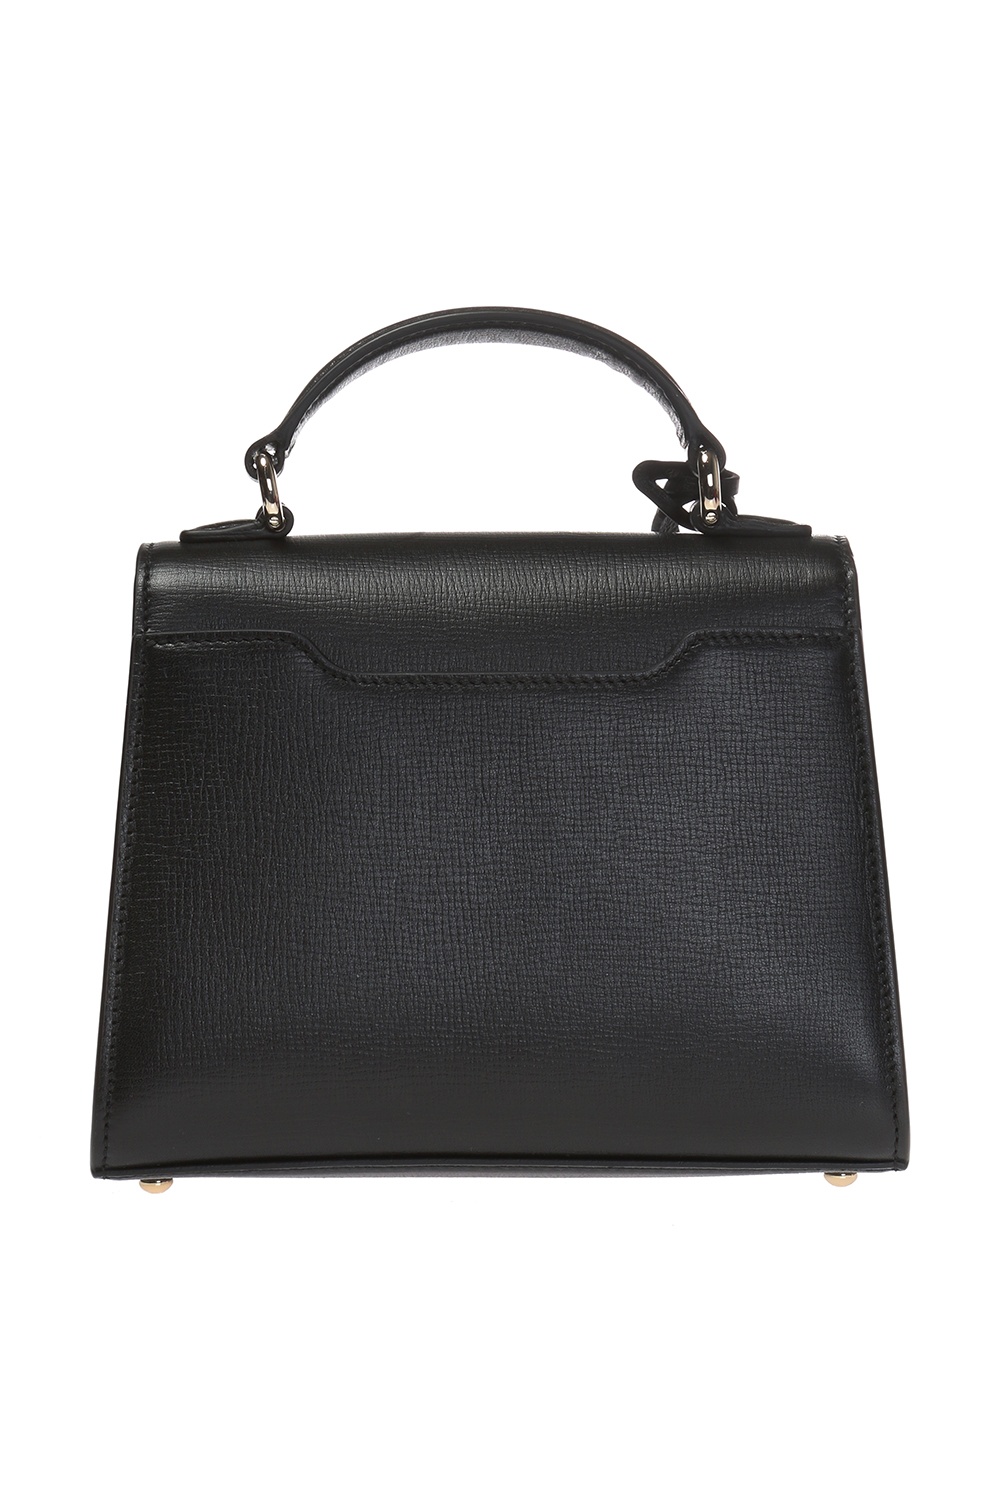 Salvatore Ferragamo 'Letty' shoulder bag | Women's Bags | Vitkac